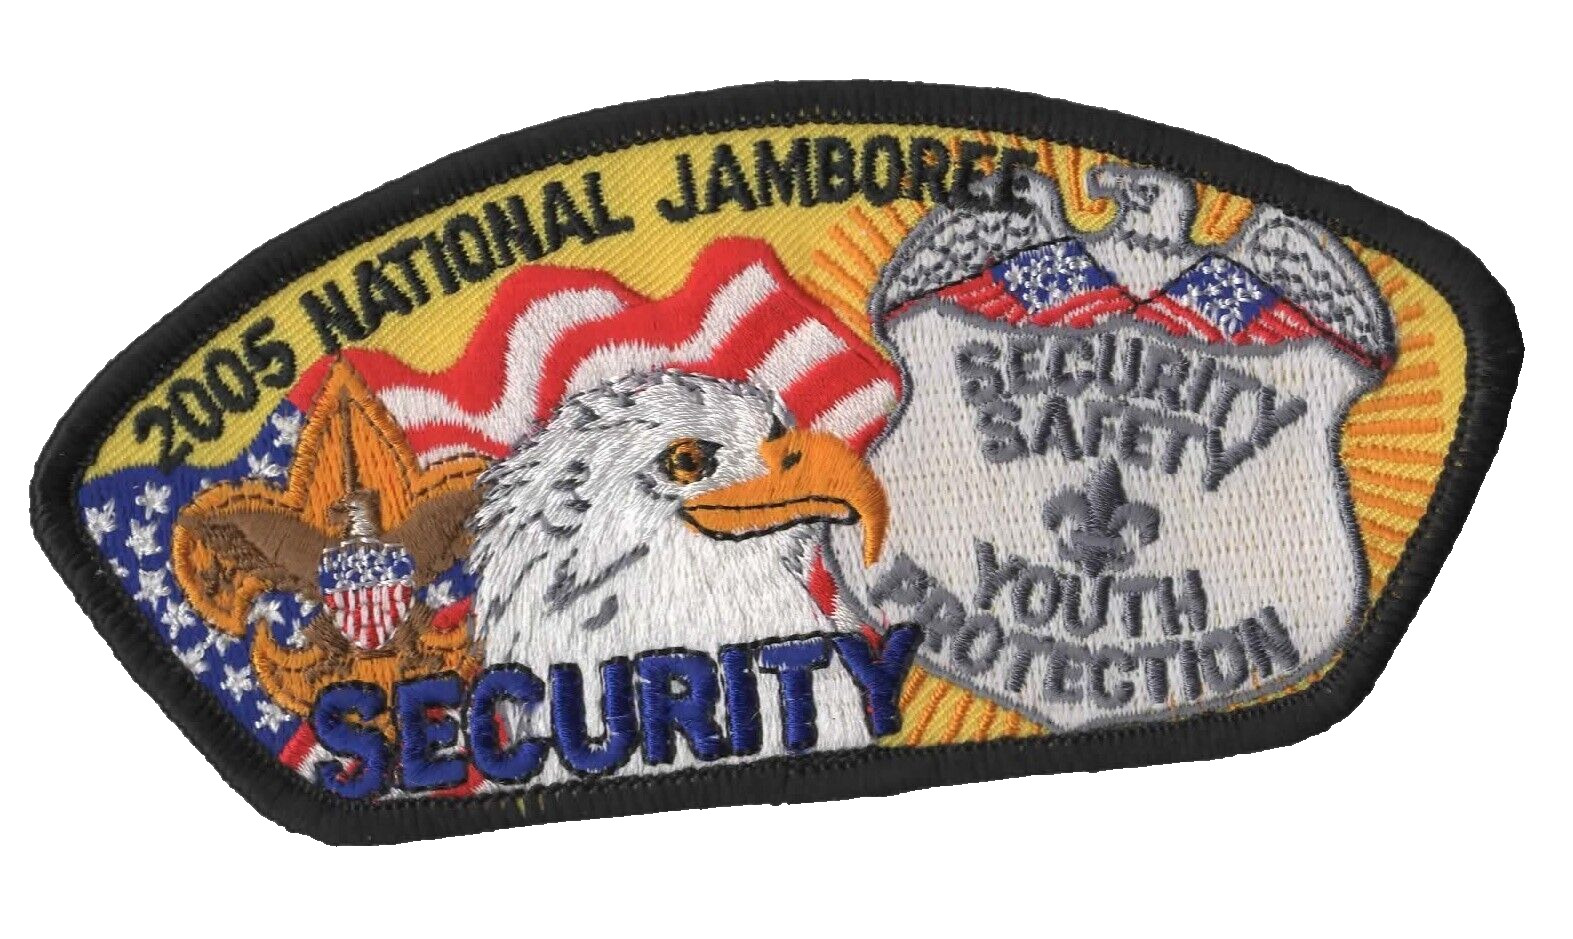 2005 Jamboree Security Youth Protection JSP Black Bdr (AR133)